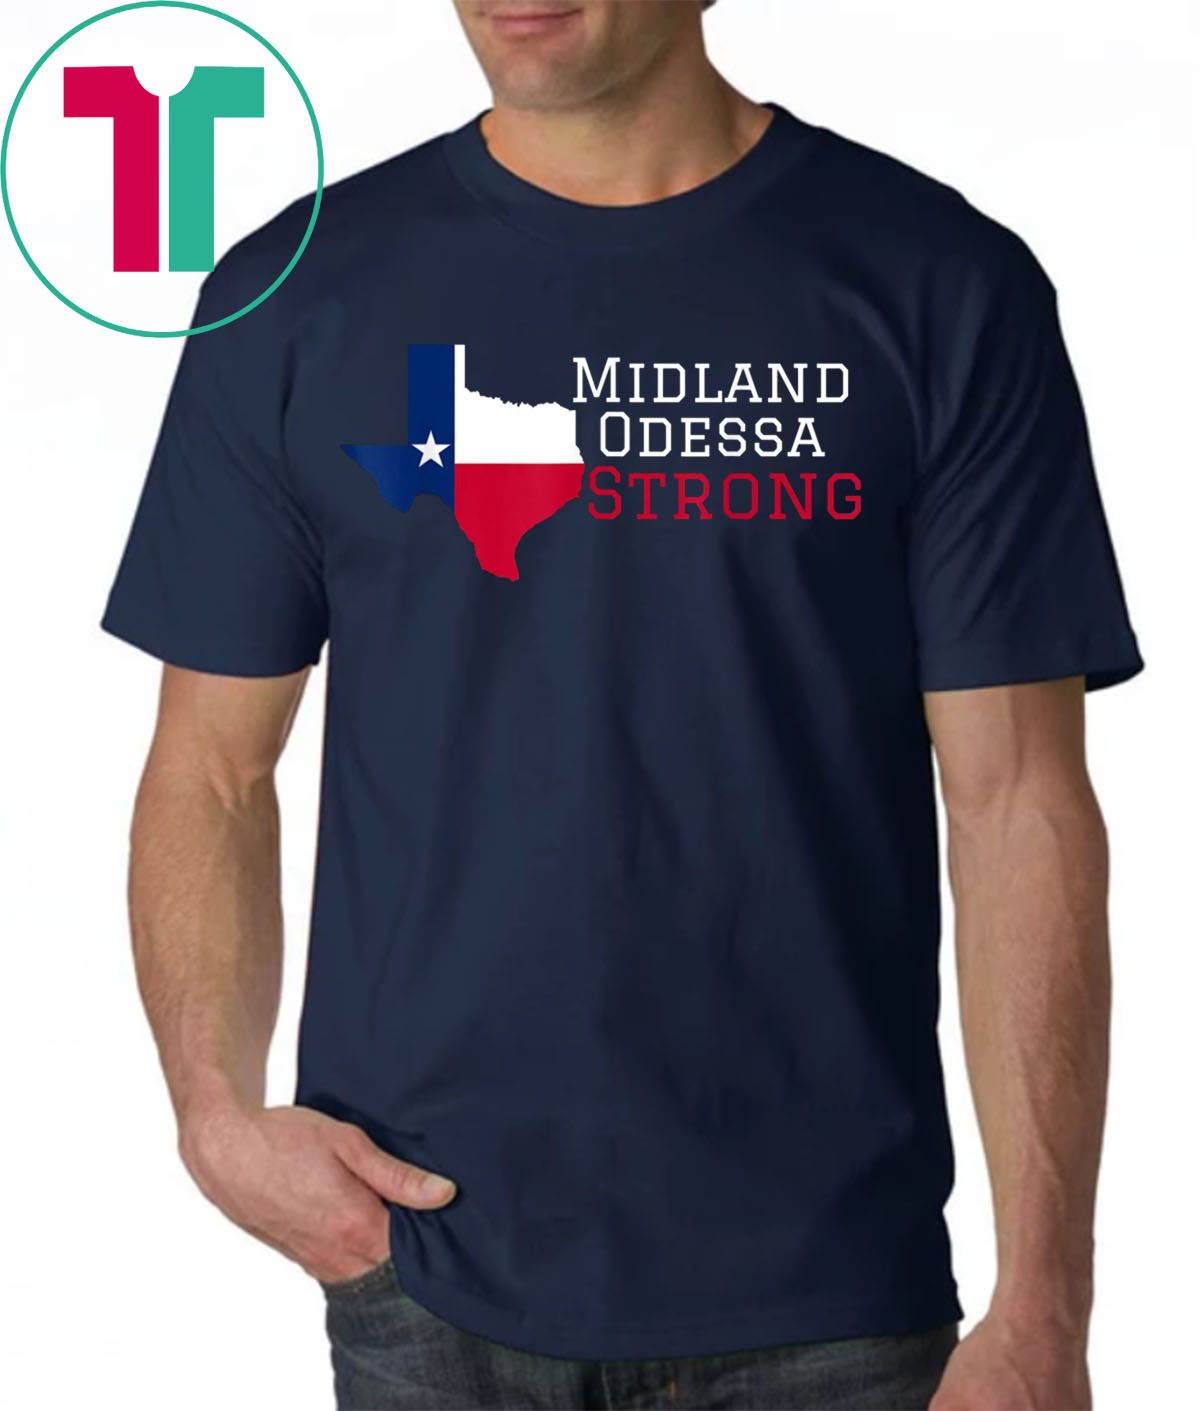 Midland Odessa Strong T-Shirt - Reviewshirts Office